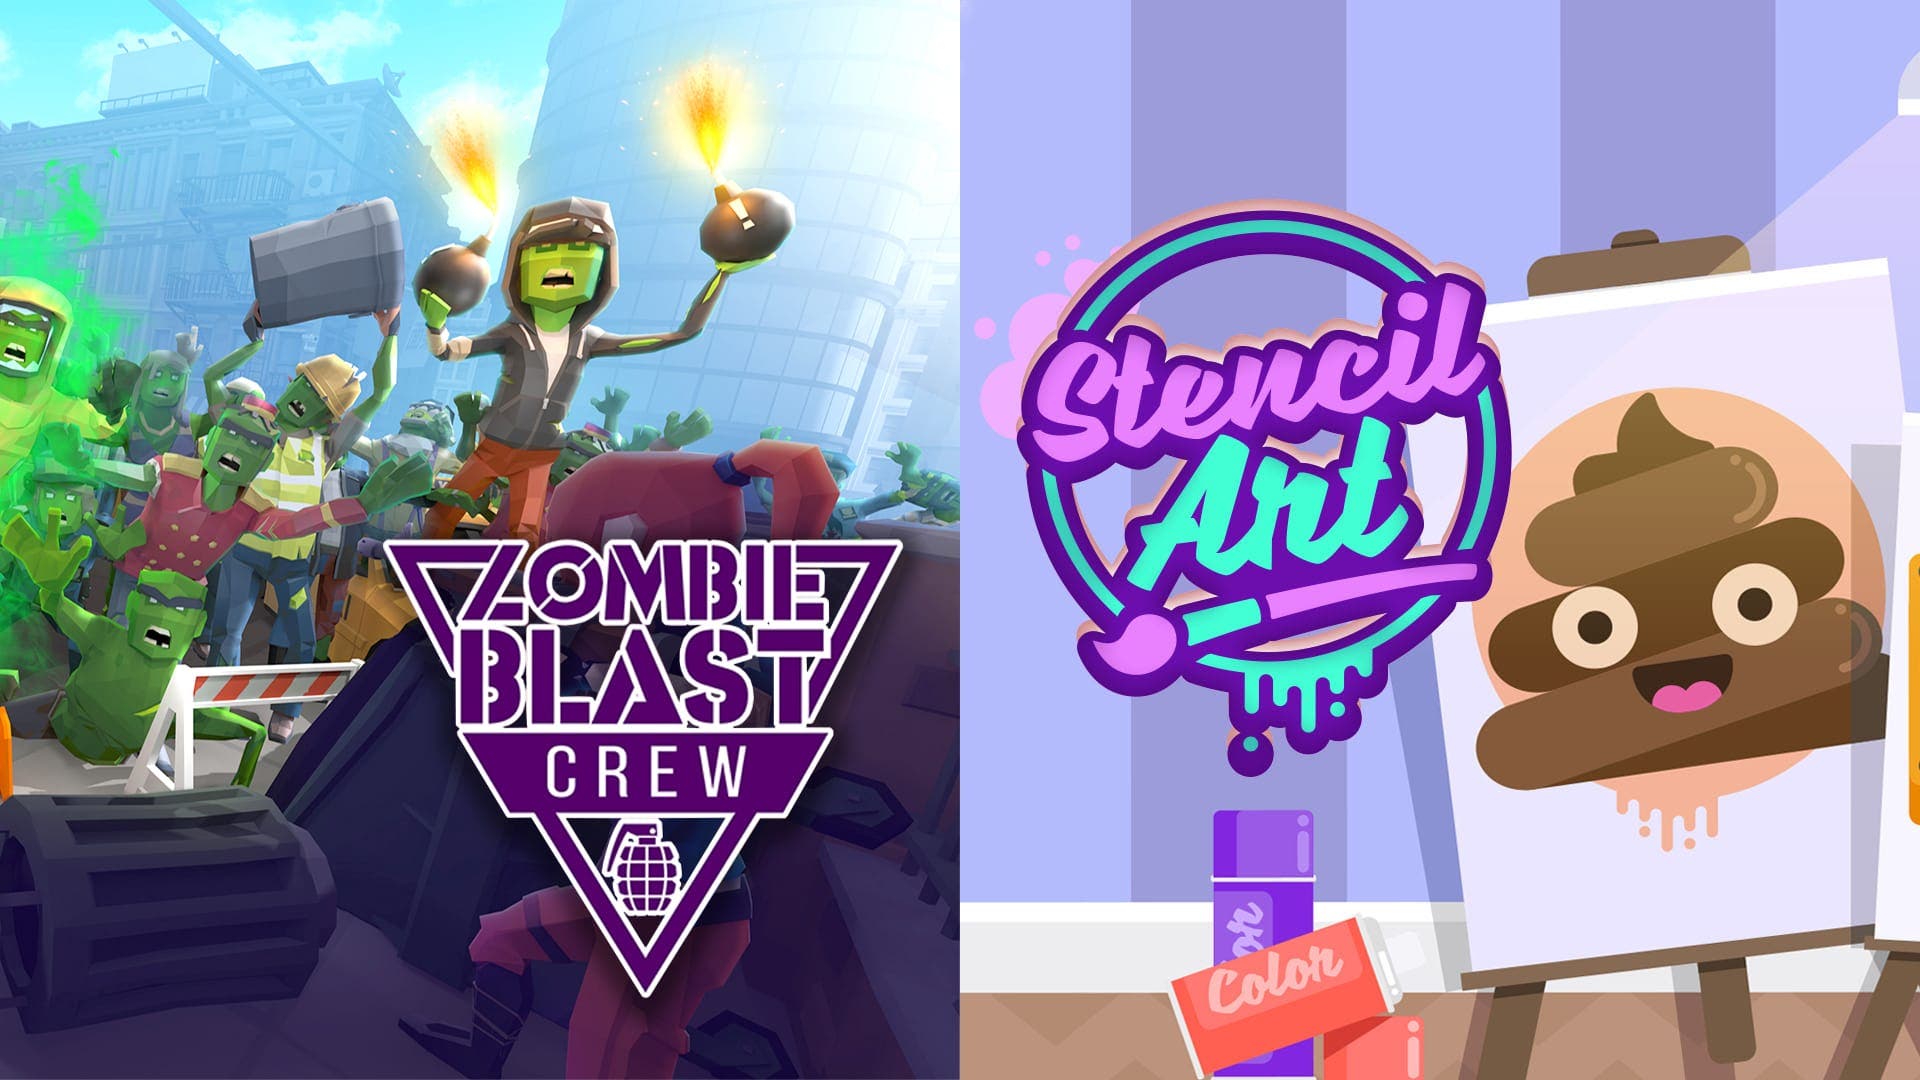 Qubic Games anuncia Zombie Blast Crew y Stencil Art para Nintendo Switch